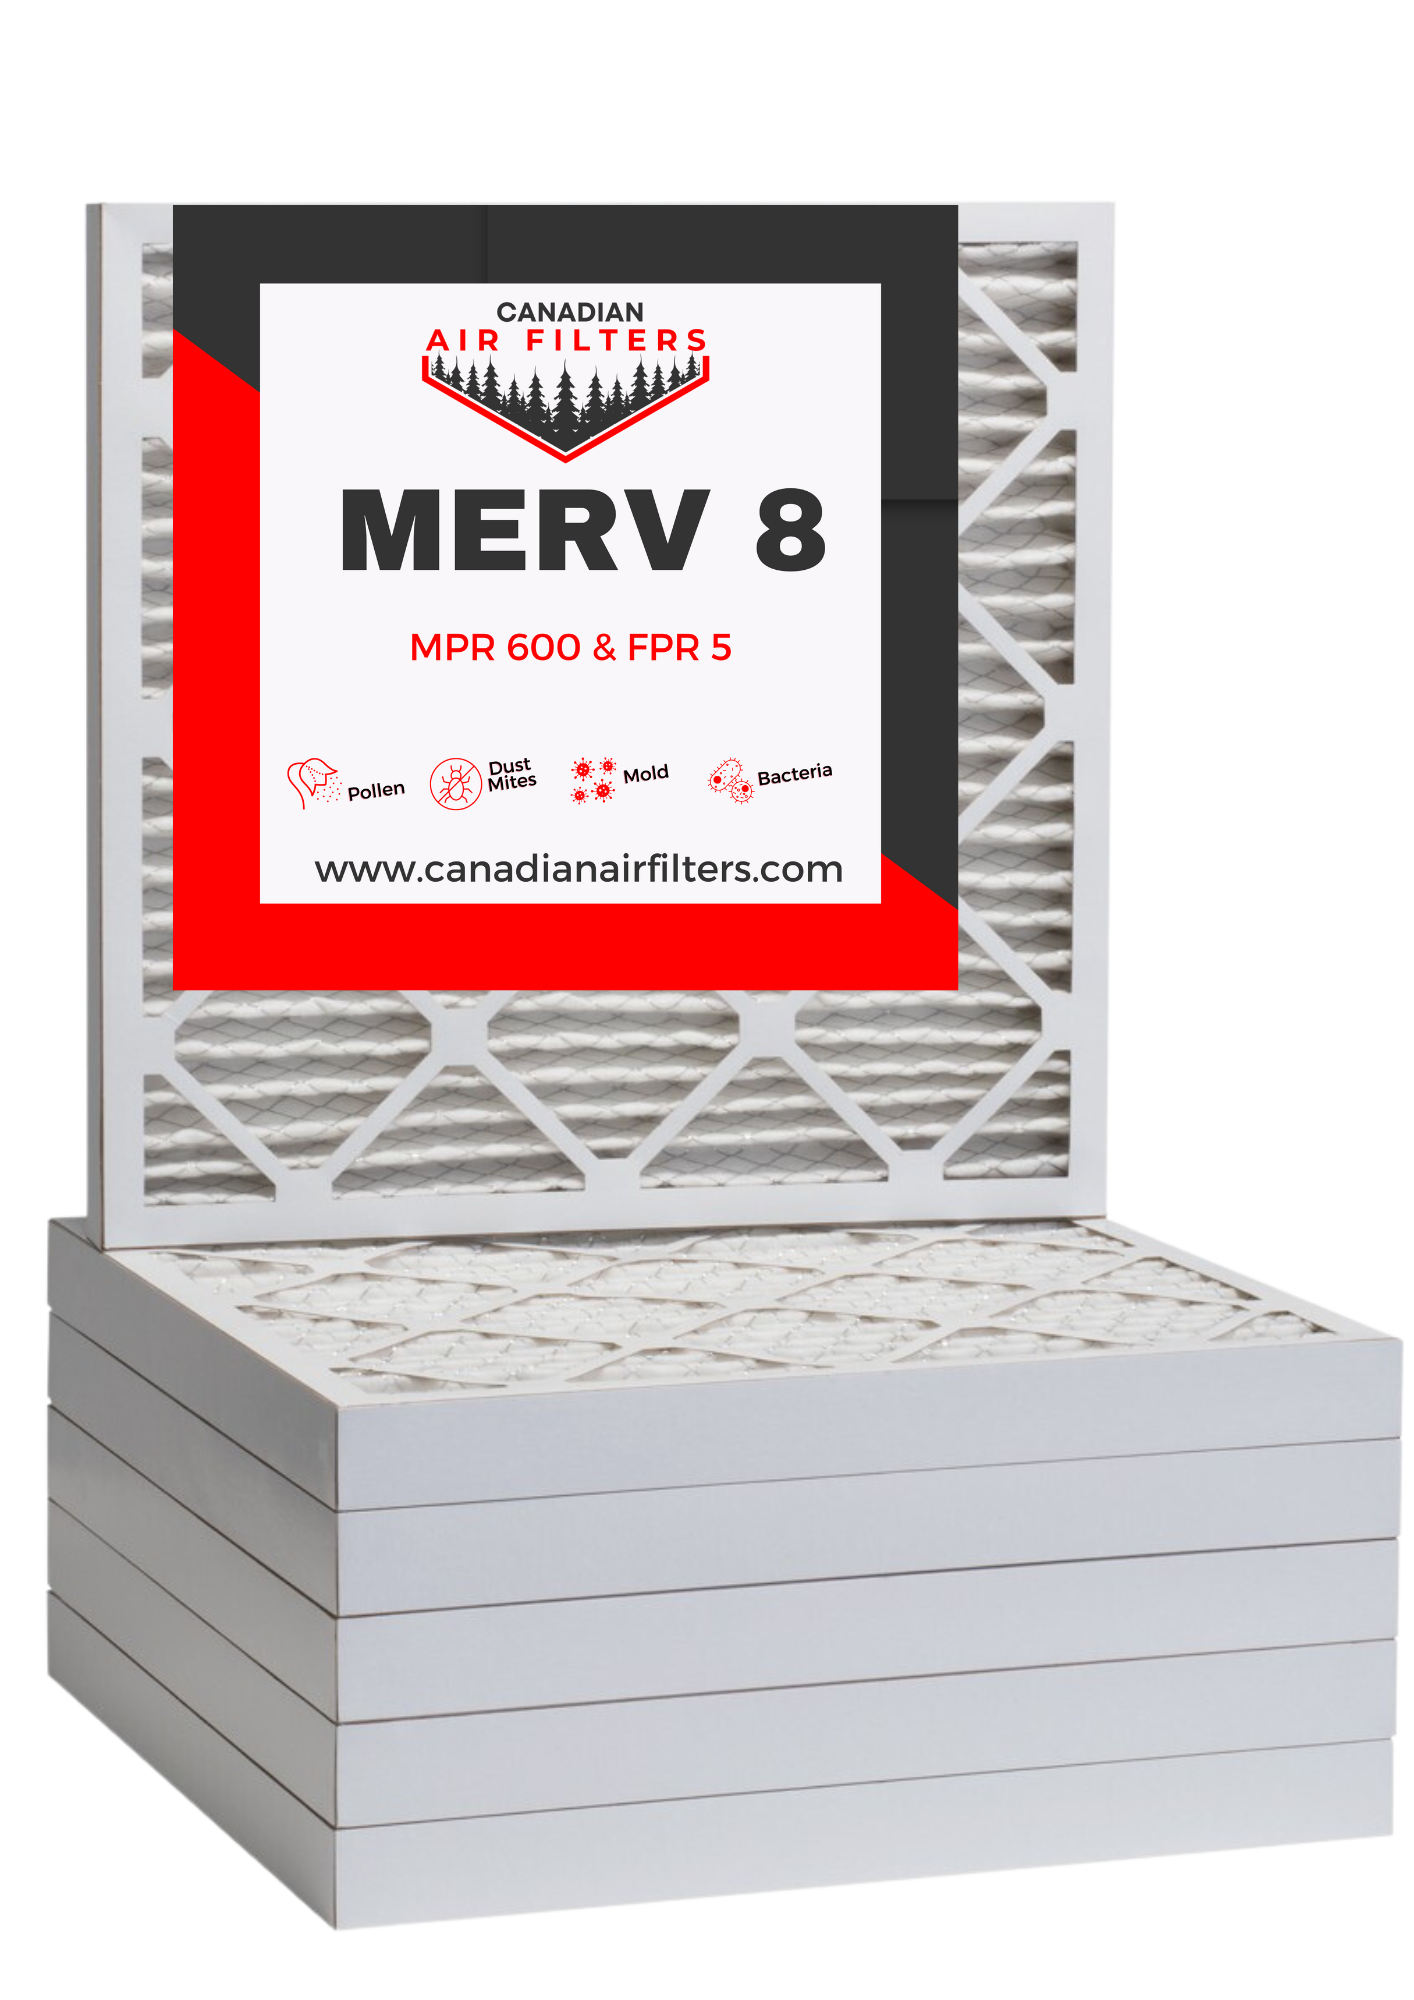 9.5 x 27.5 x 2 - MERV 8 Pleated Air Filter (06 pack)